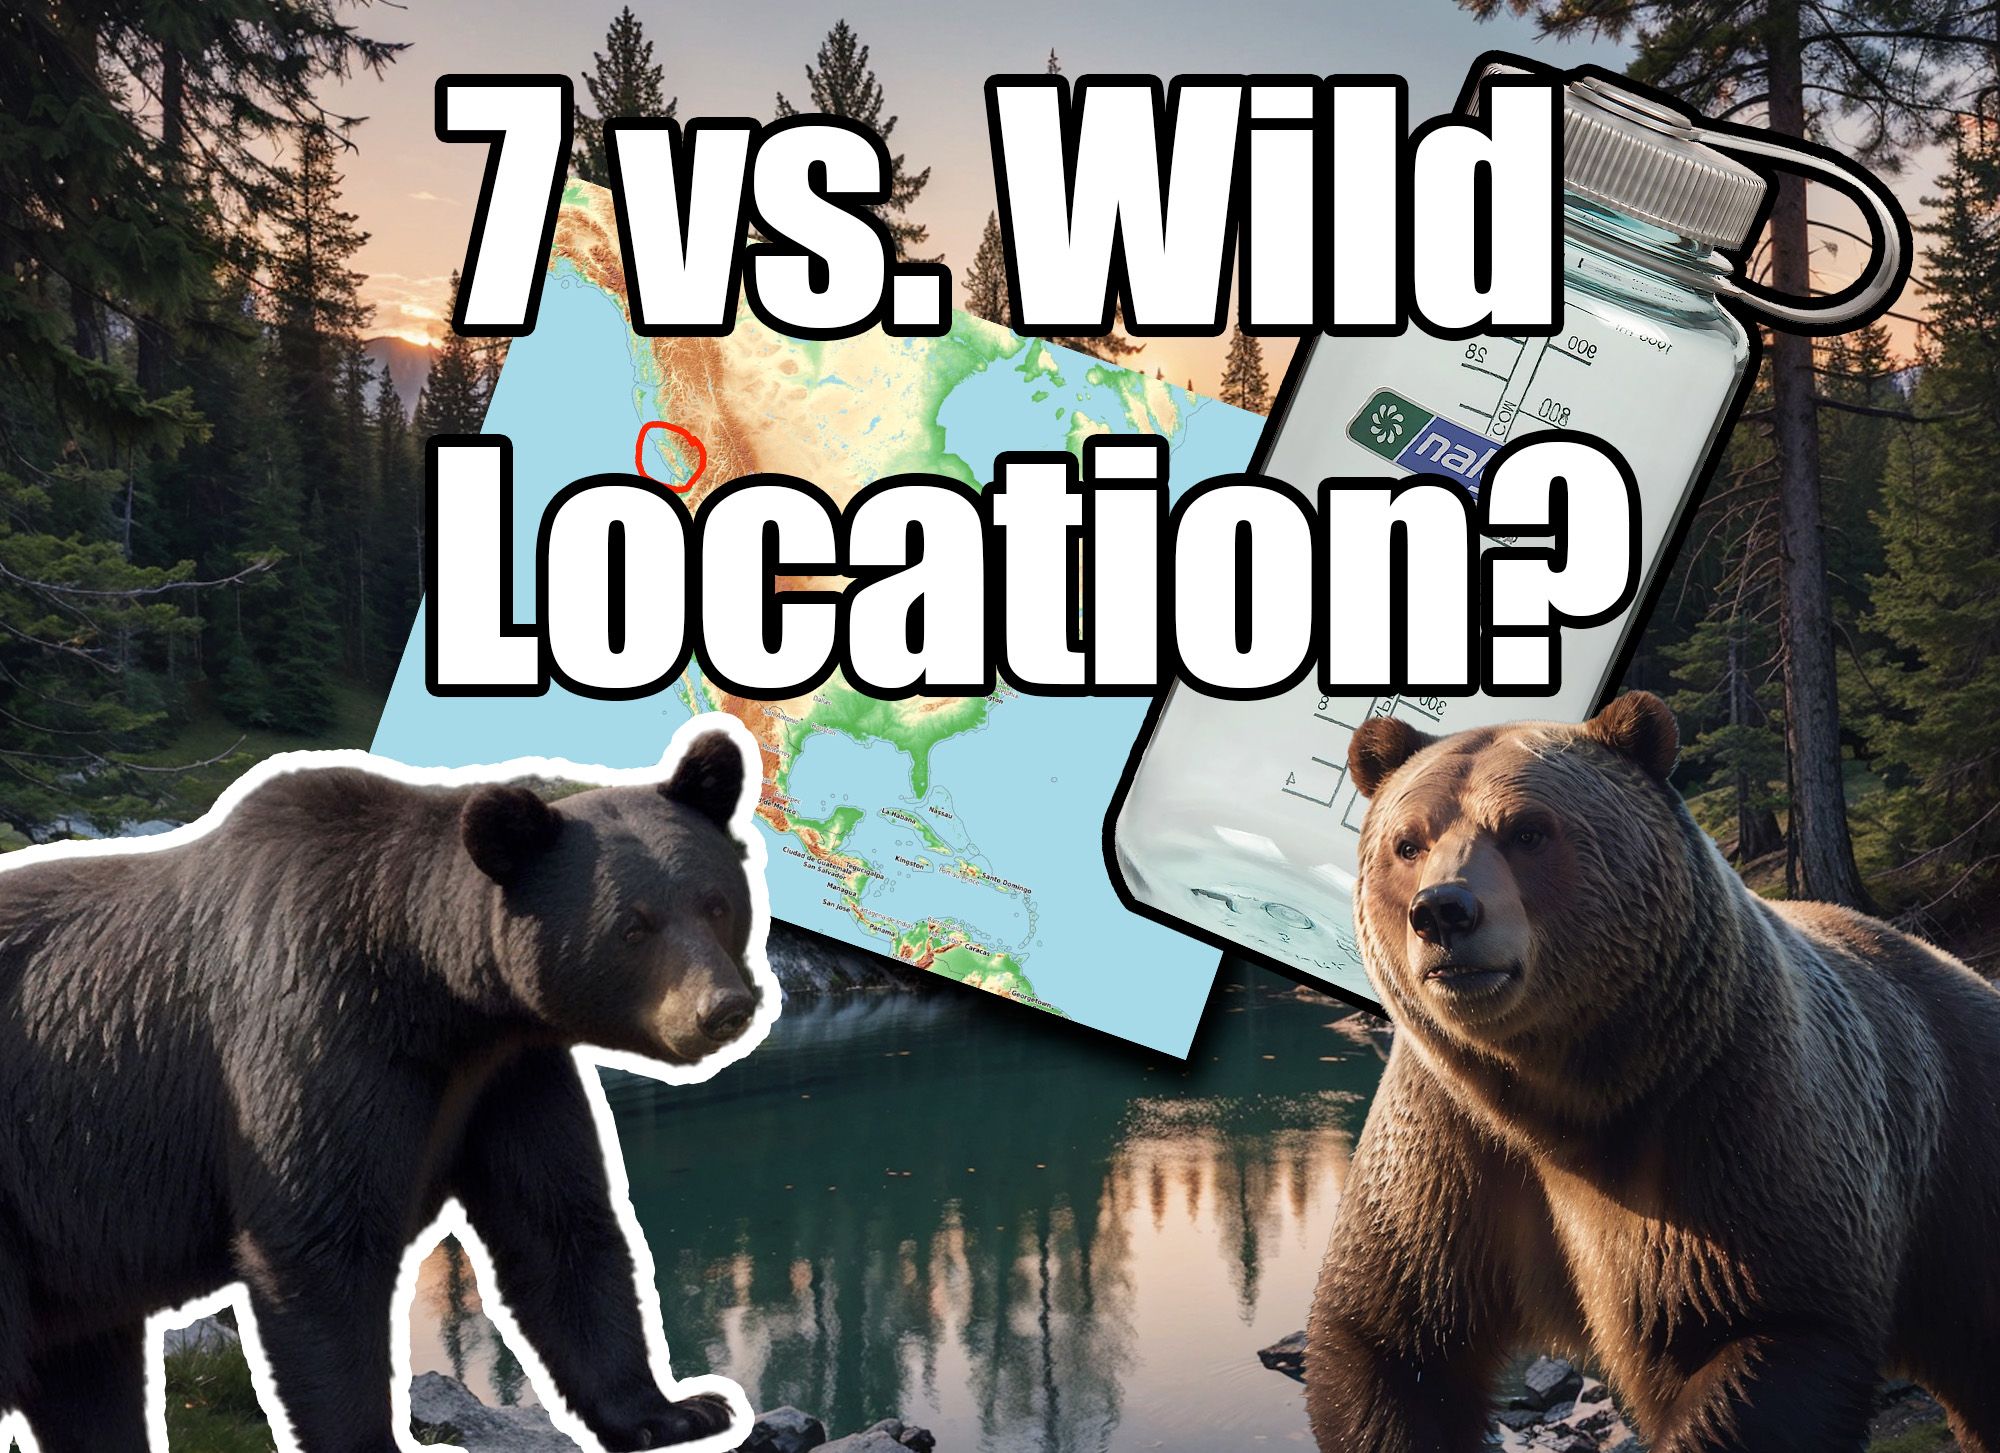 7 vs. Wild: Season 3 - Where will the season be filmed? My speculations